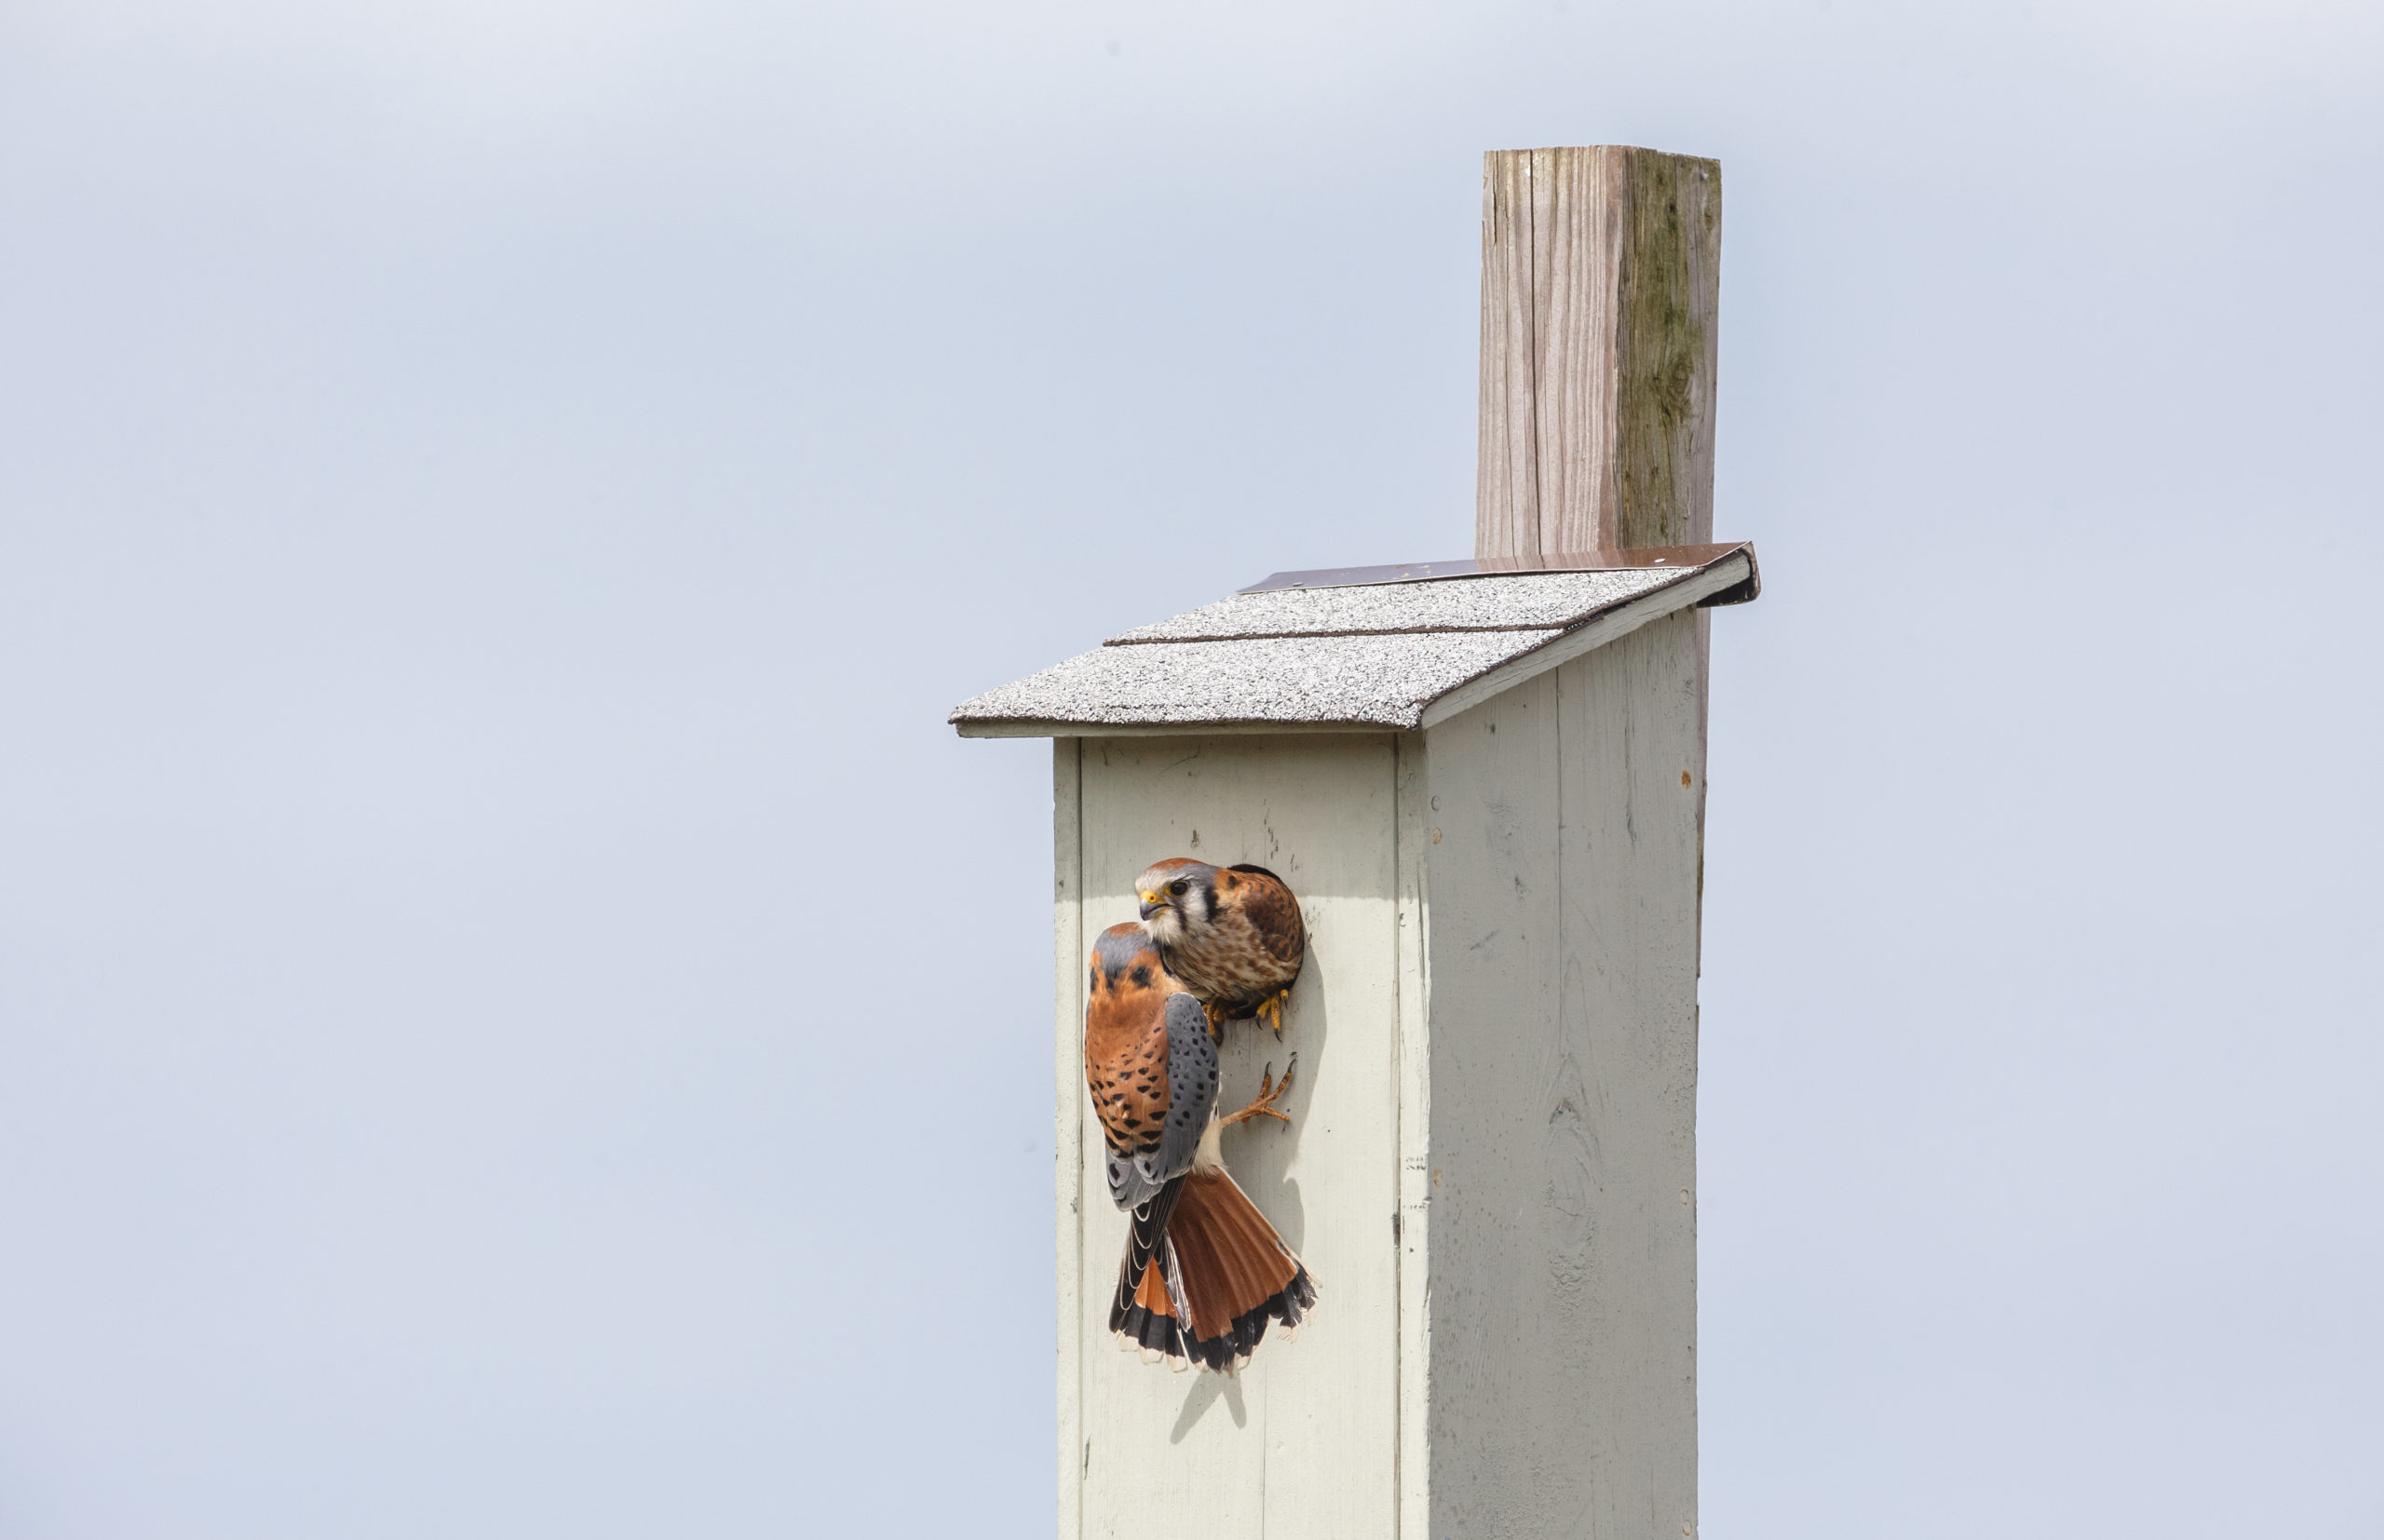 two kestrels (sparrow hawks) at the entrance of a kestrel nest box